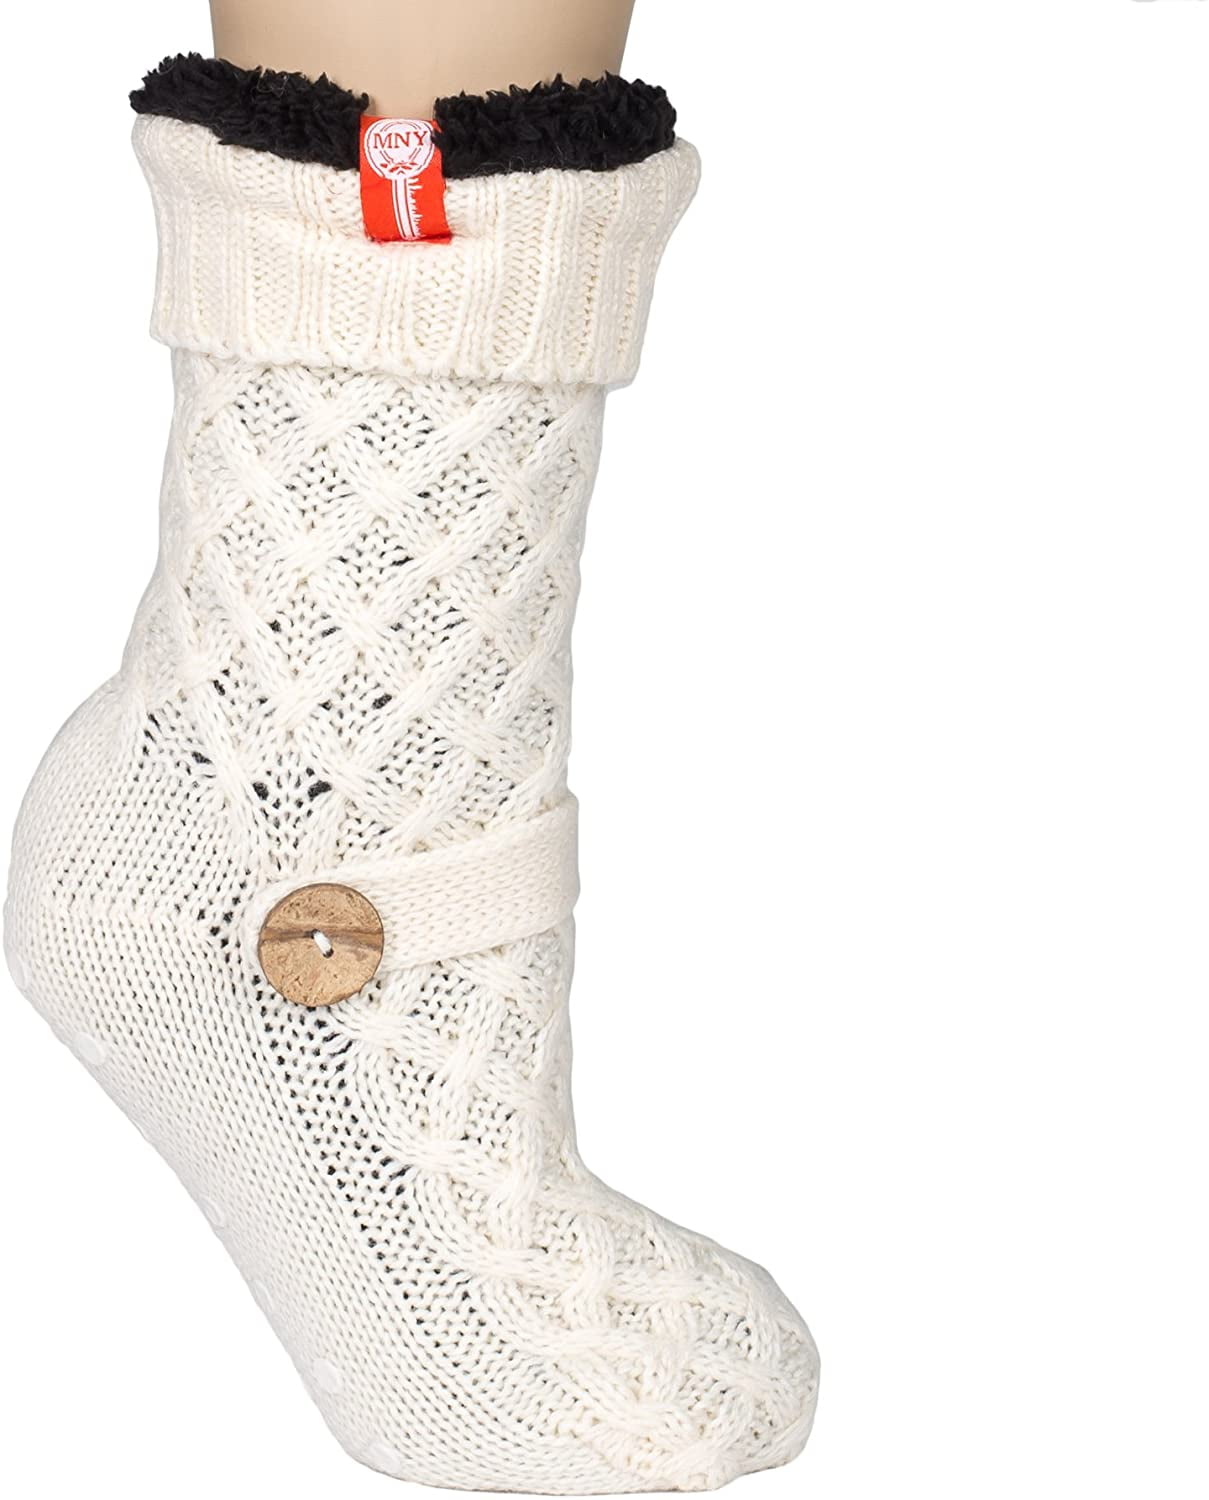 Womens Sweater Design Super Thick Comfy Non-Skid Slipper Socks